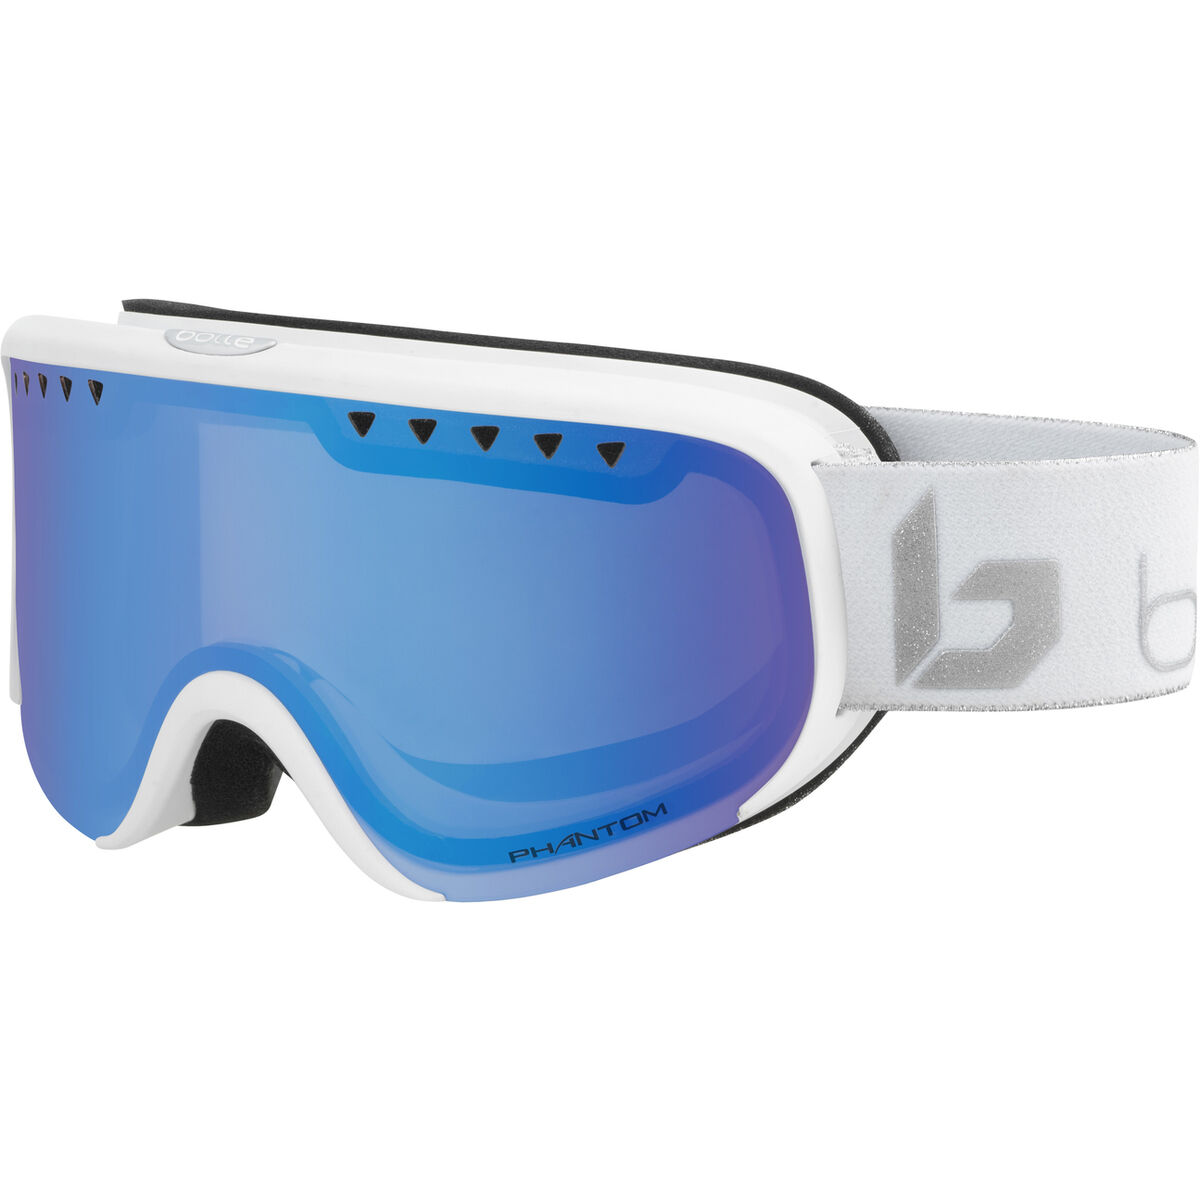 New Bolle Scarlett ski snow goggles matte white & vermillion blue lens size S-M 